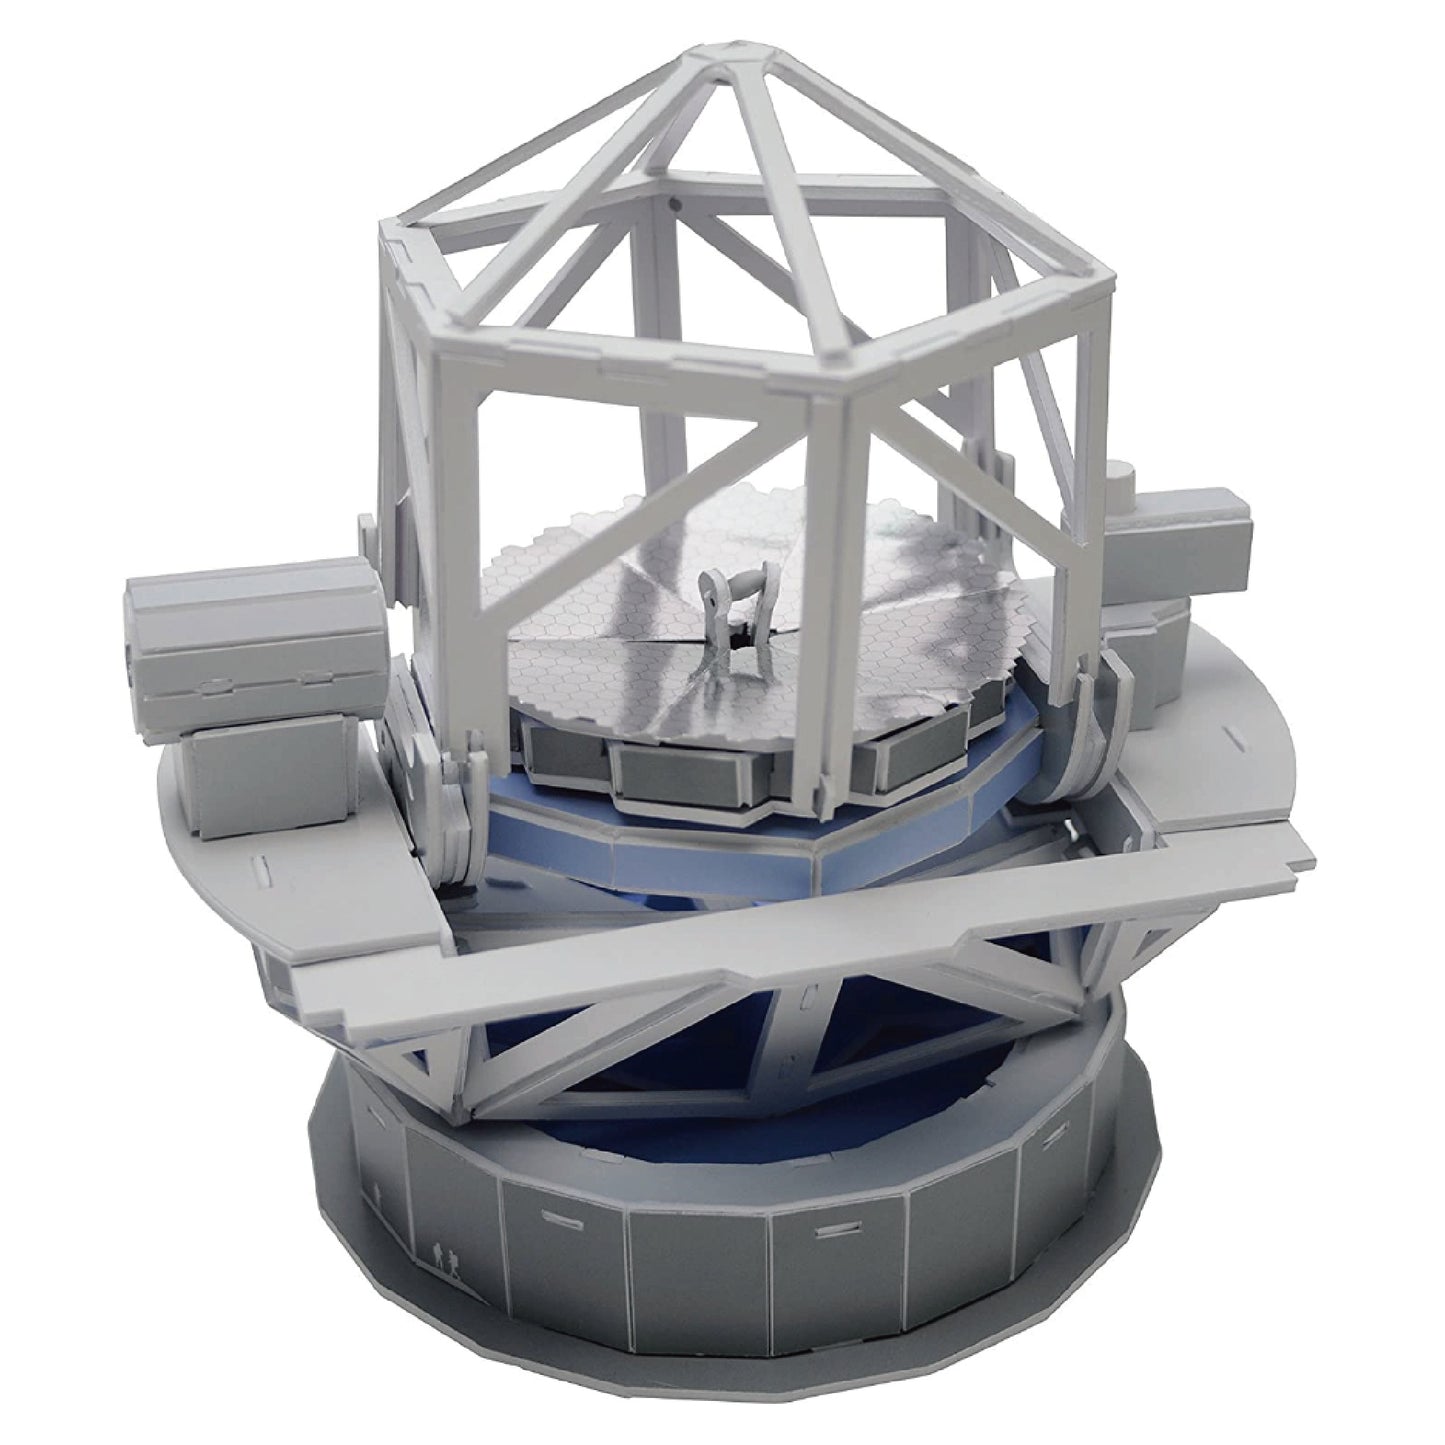  3Dパズル  工作キット 次世代超大型望遠鏡TMT 03